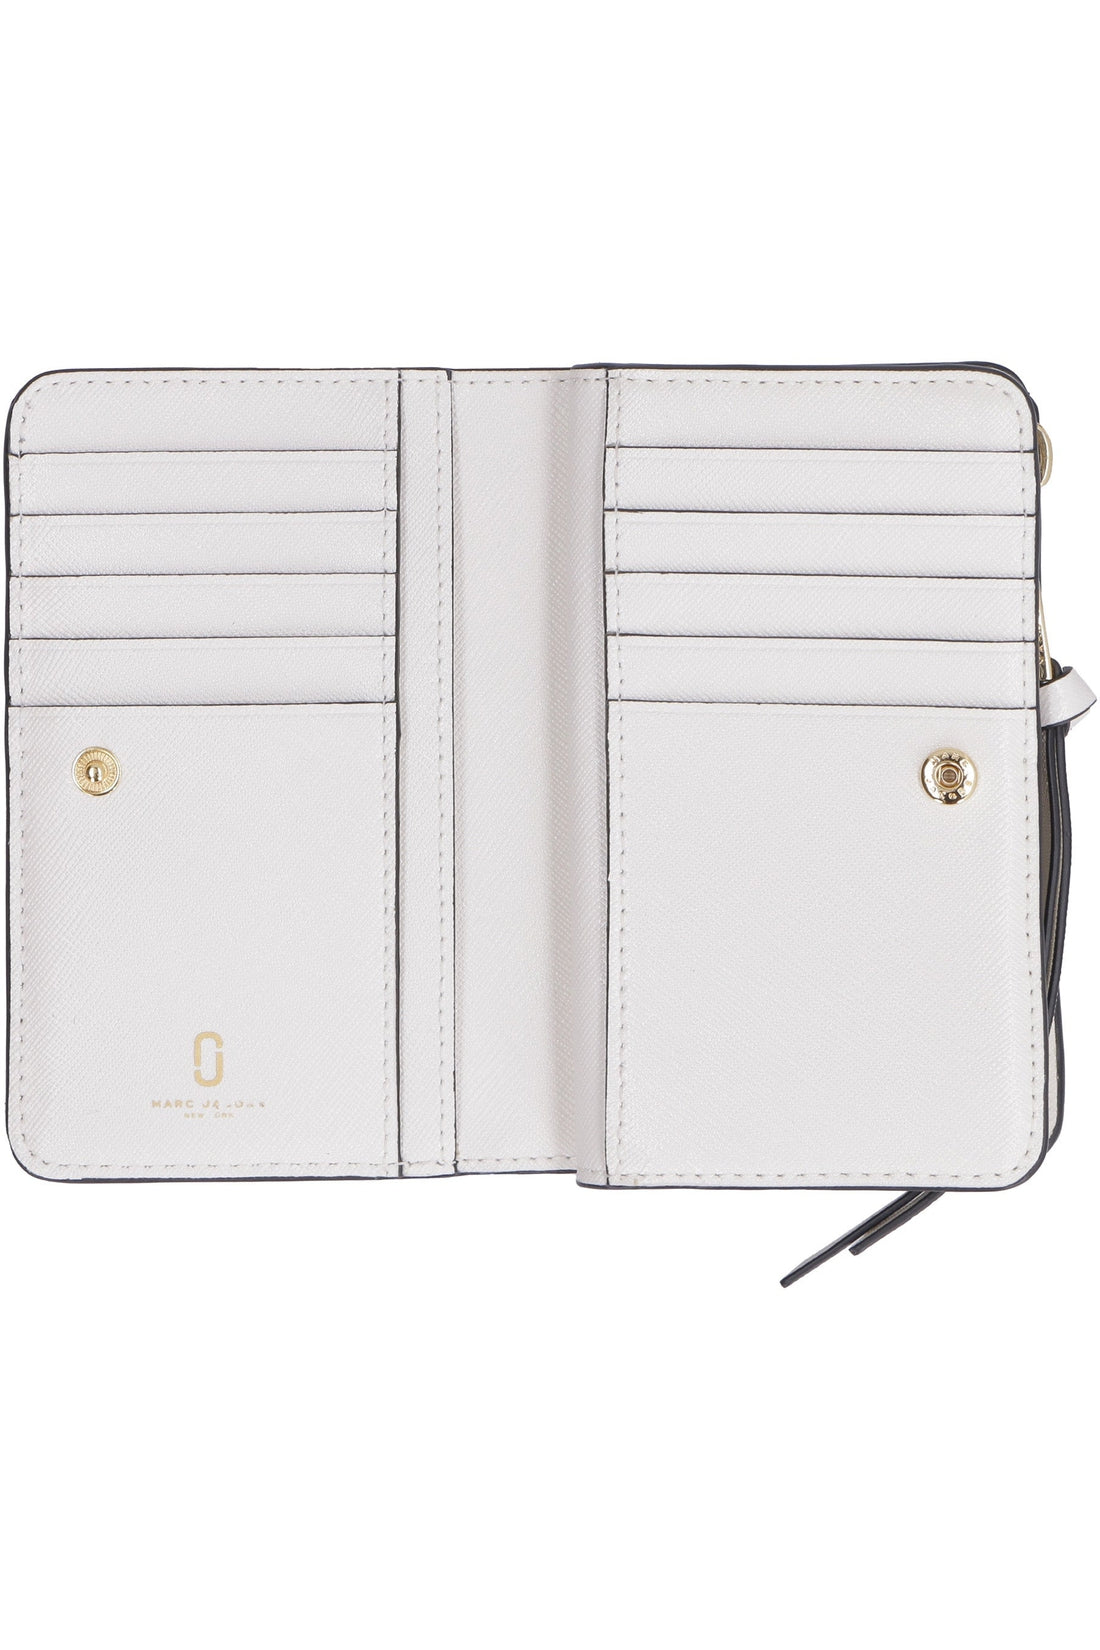 Marc Jacobs-OUTLET-SALE-Snapshot leather wallet-ARCHIVIST